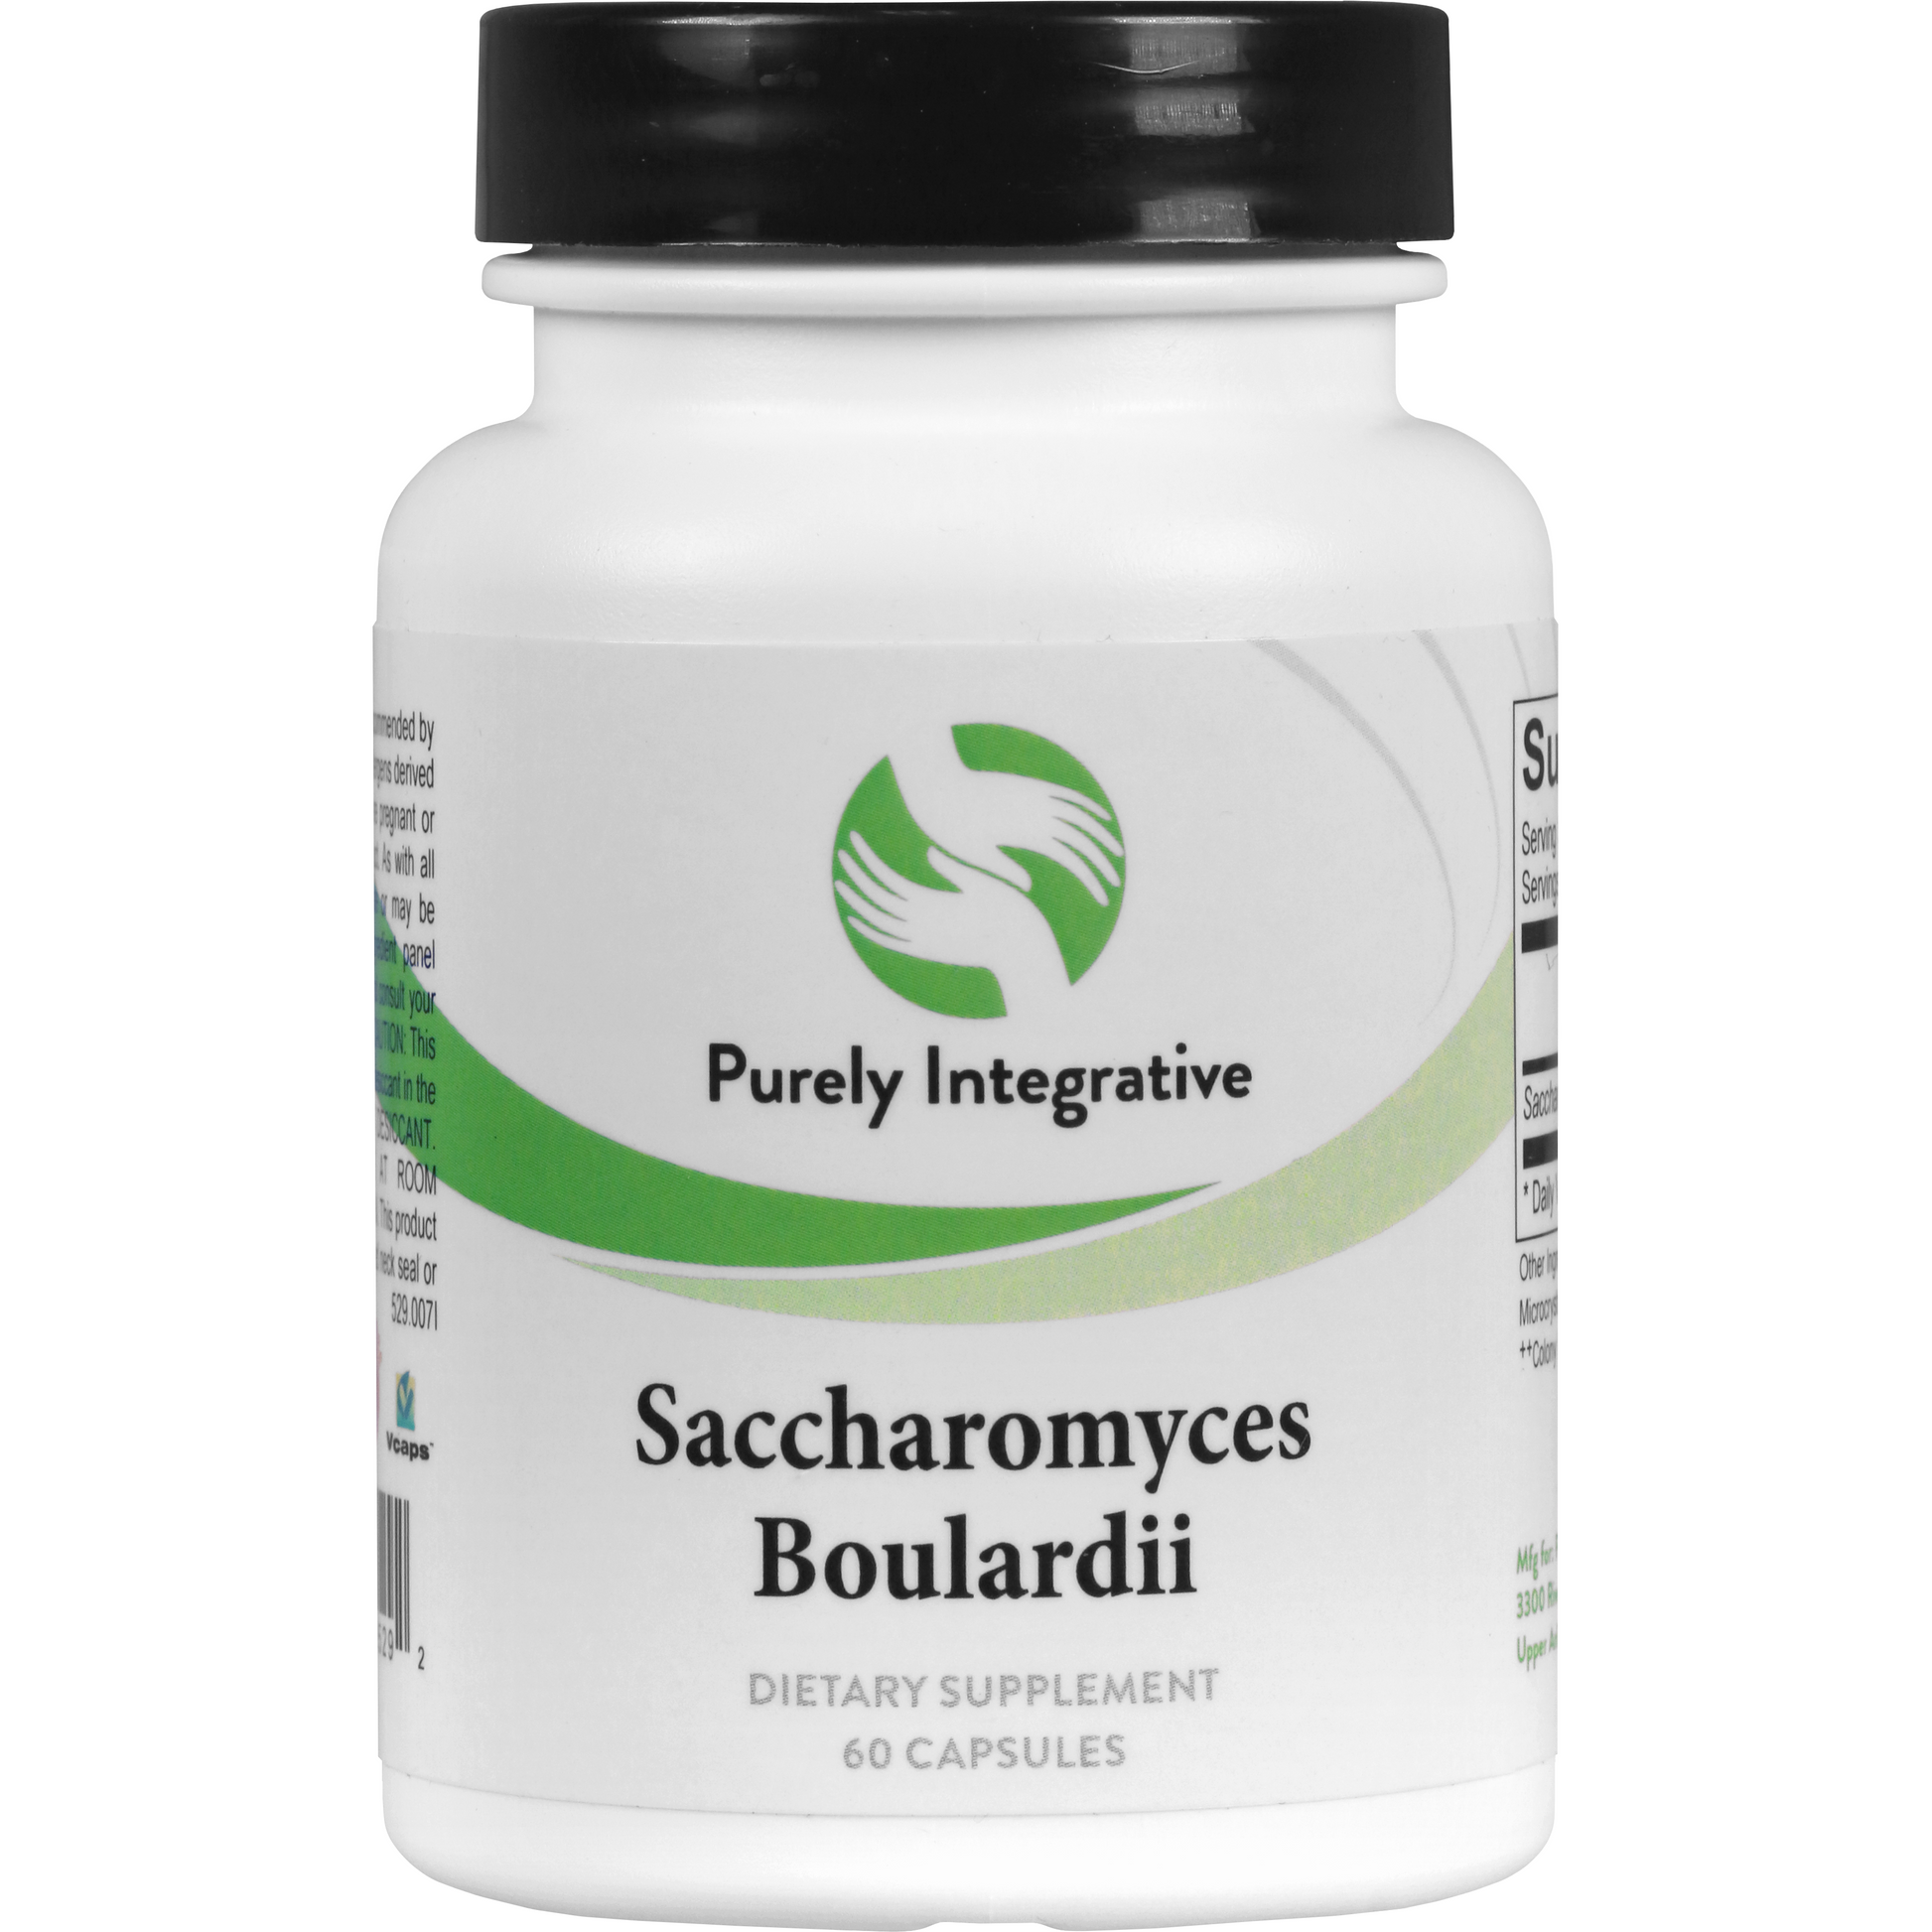 Saccharomyces boulardii – Purely Integrative